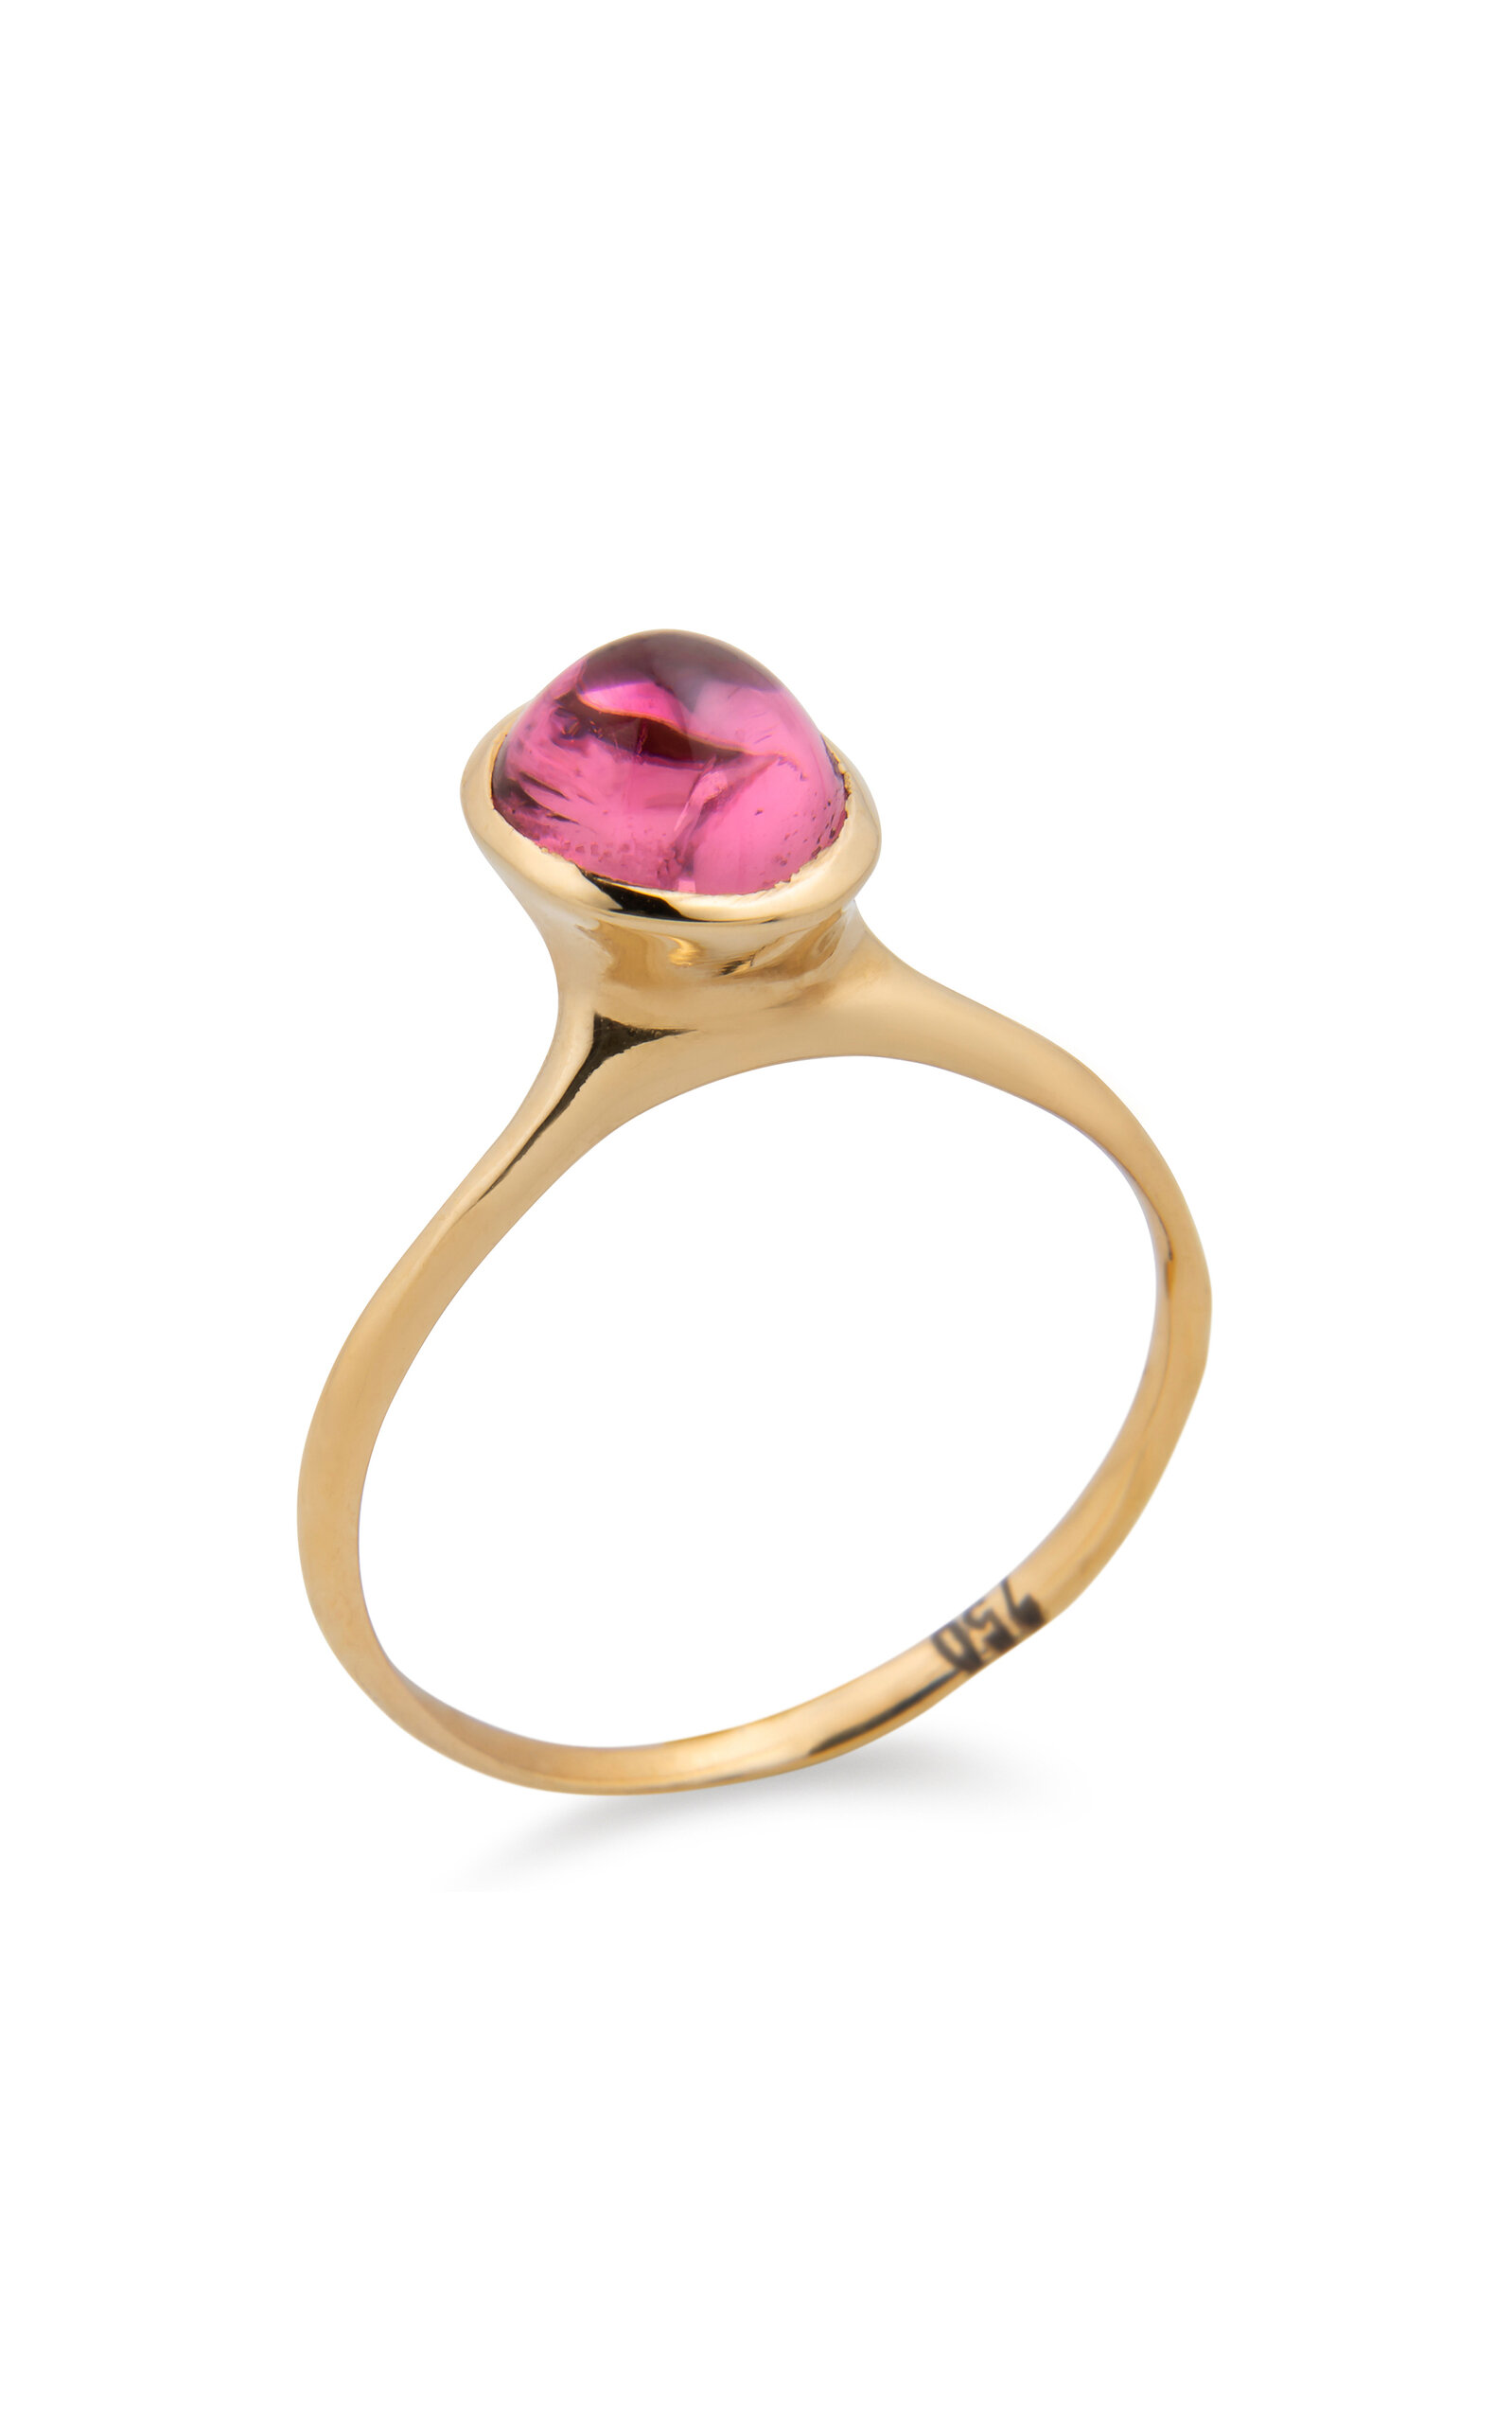 Kika Alvarenga Women's Alianca Flor 18K Gold Pink Tourmaline Ring